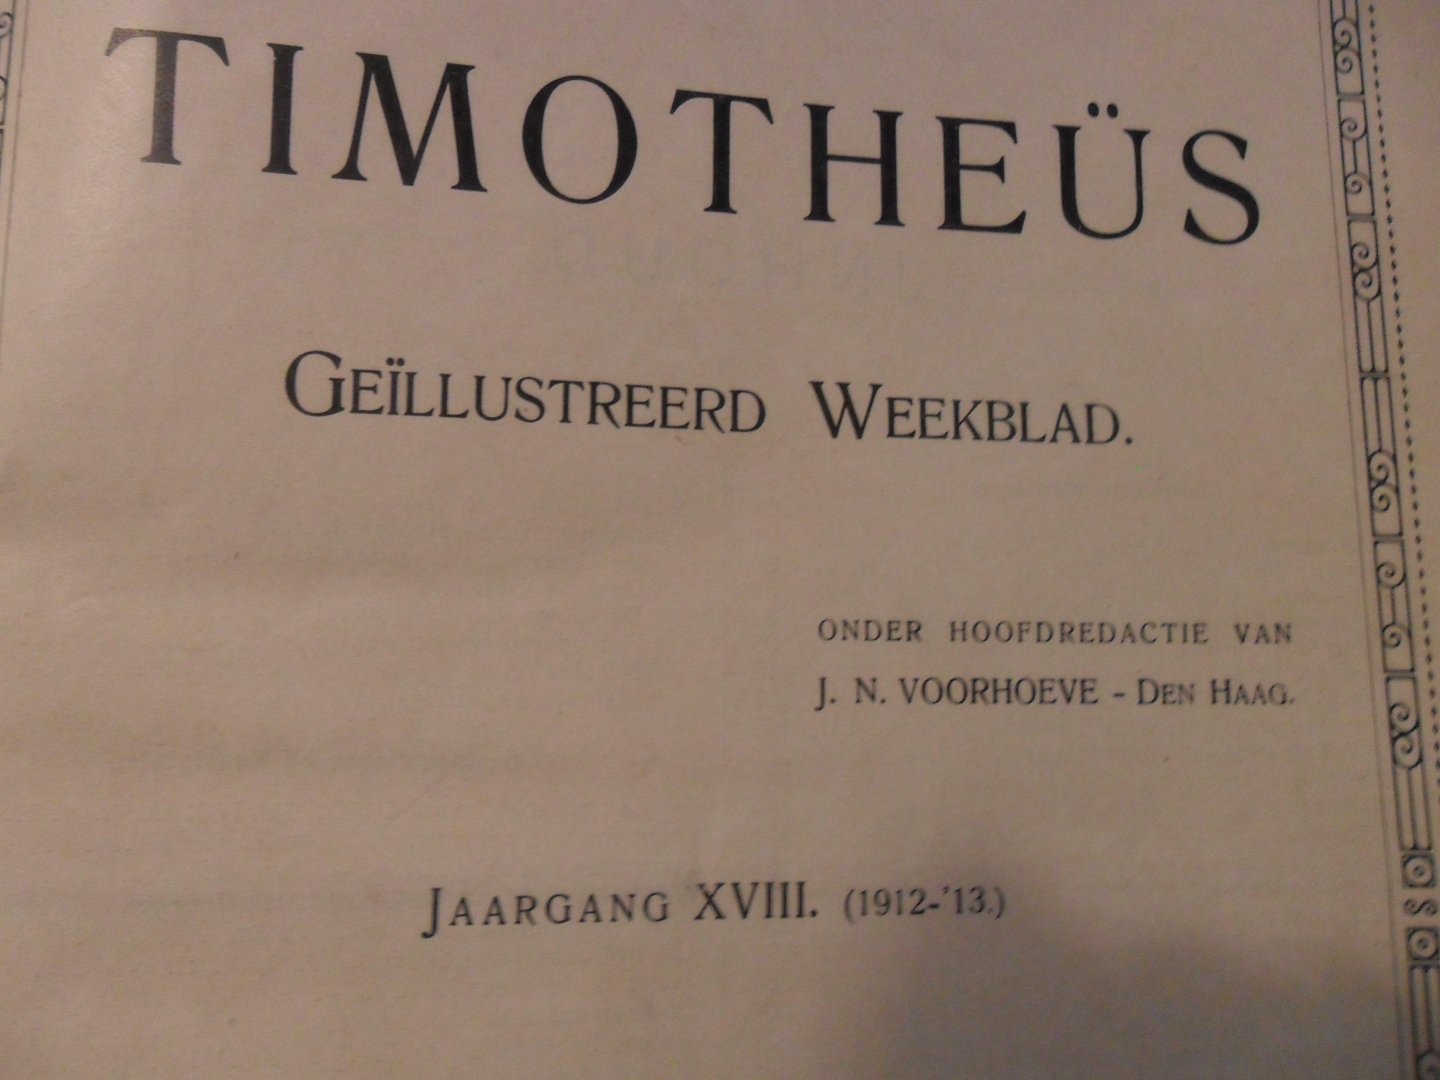 J.N. Voorhoeve Den Haag onder hoofdredactie van - Timotheus geillustreerd weekblad 1912-1913